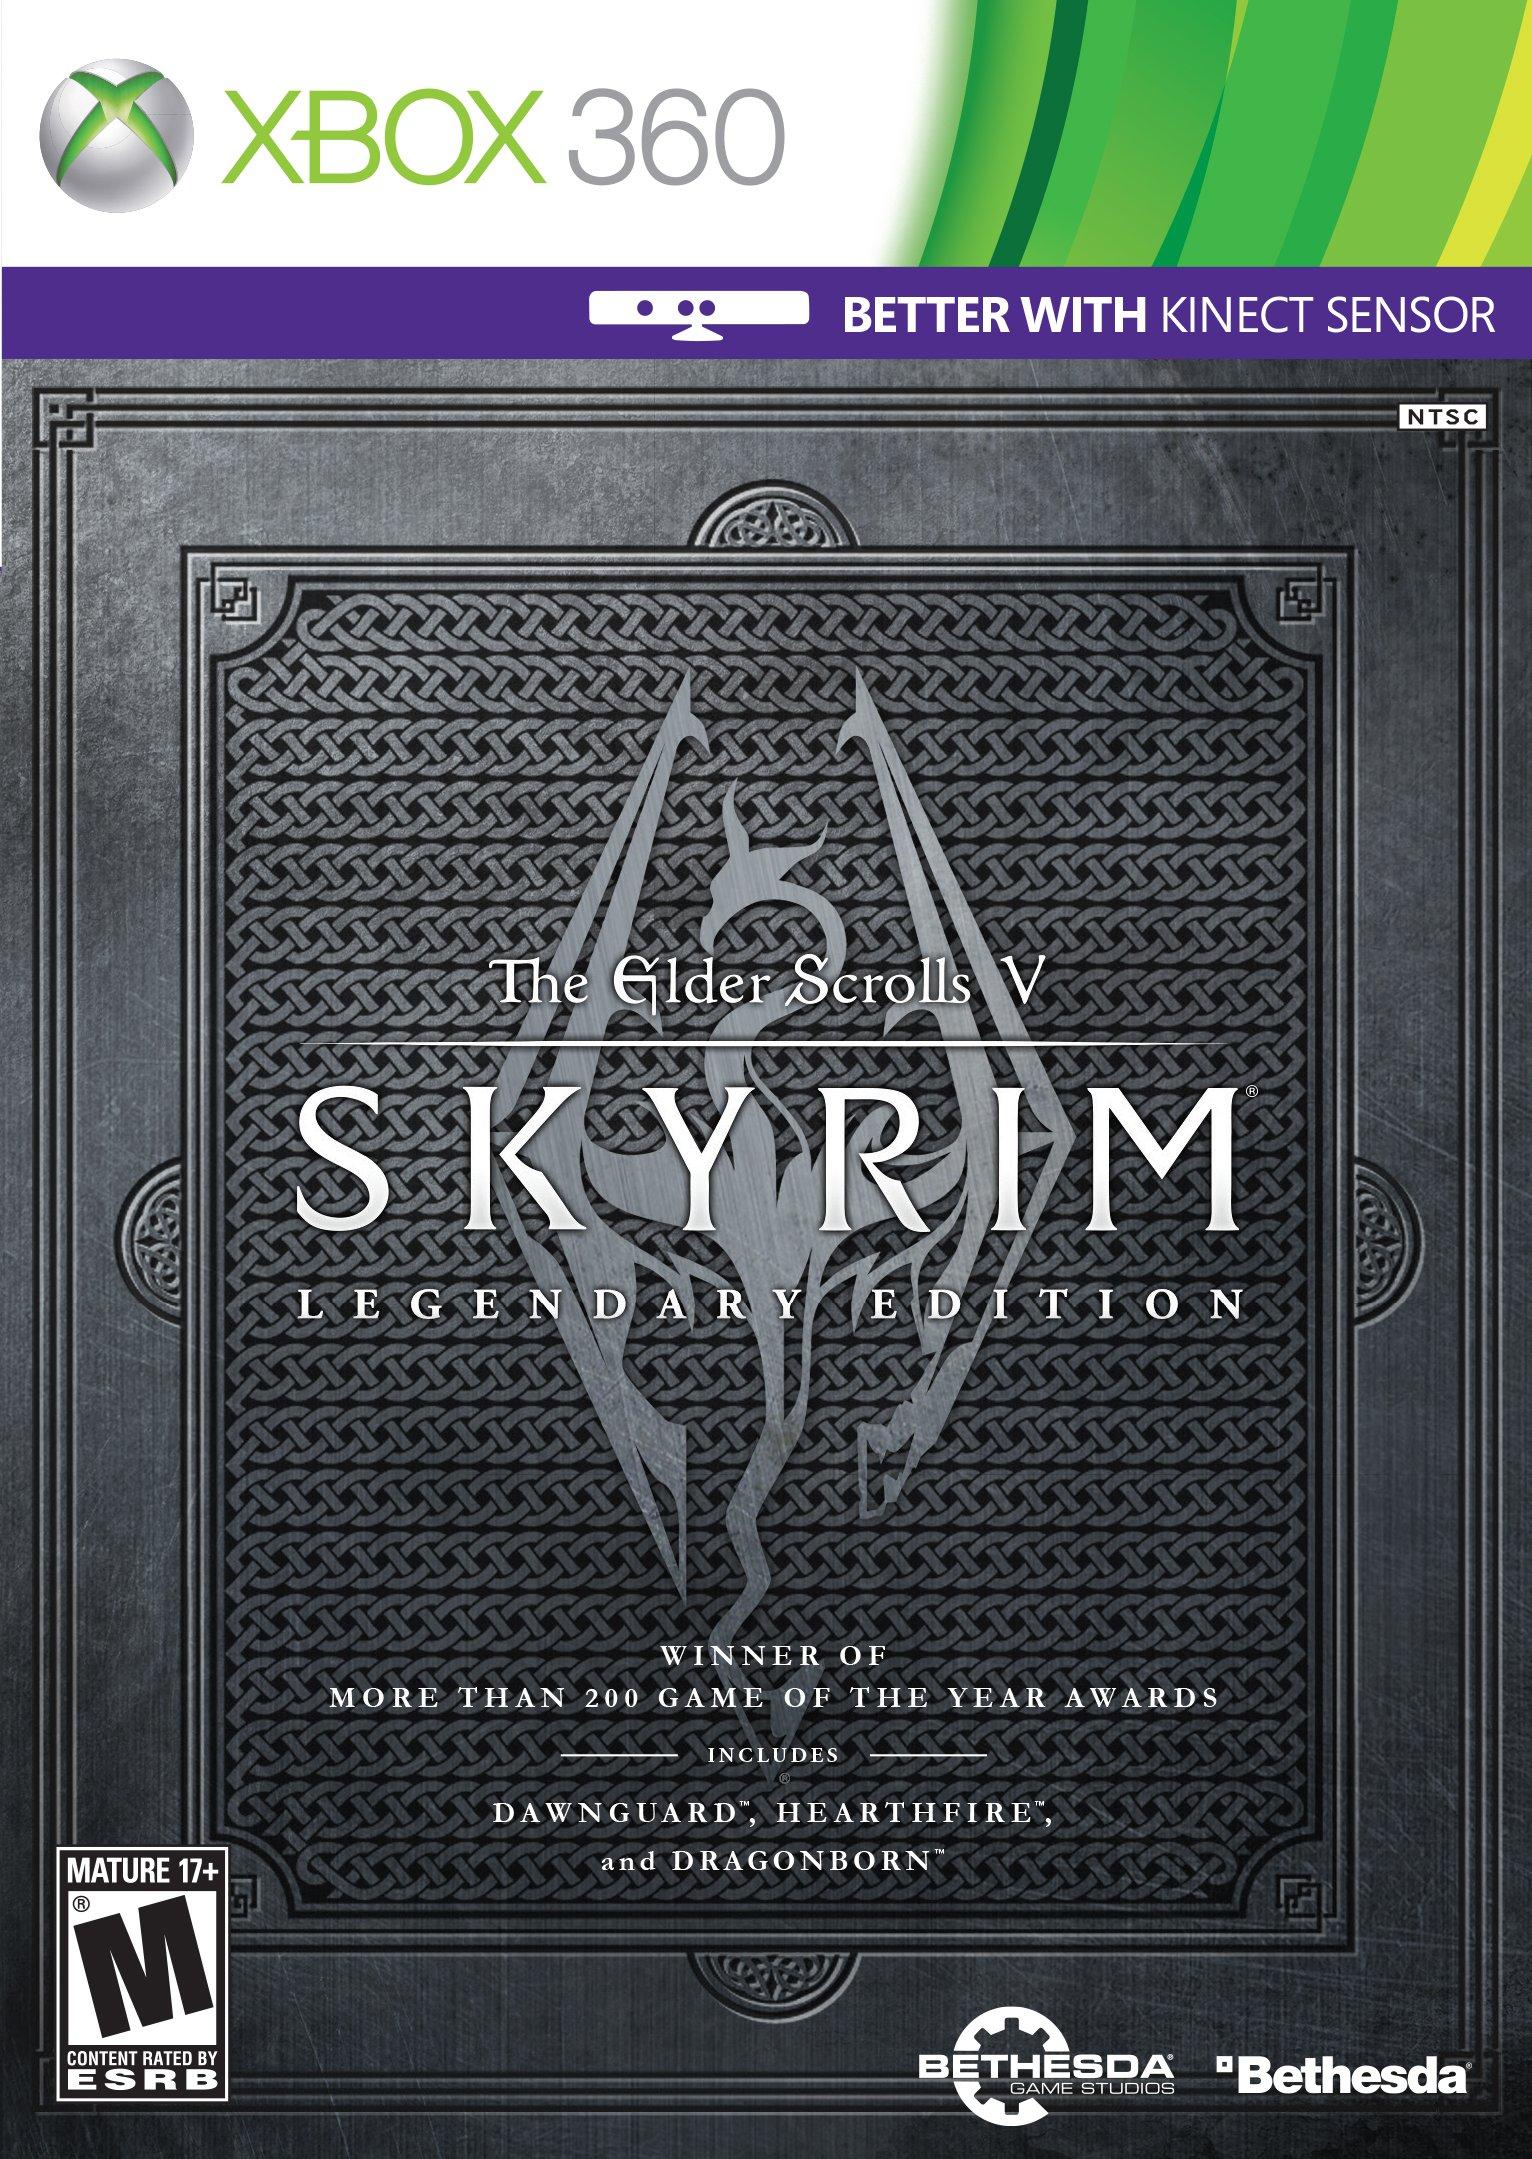 Lounge metal powder The Elder Scrolls V Skyrim Legendary Edition - Xbox 360